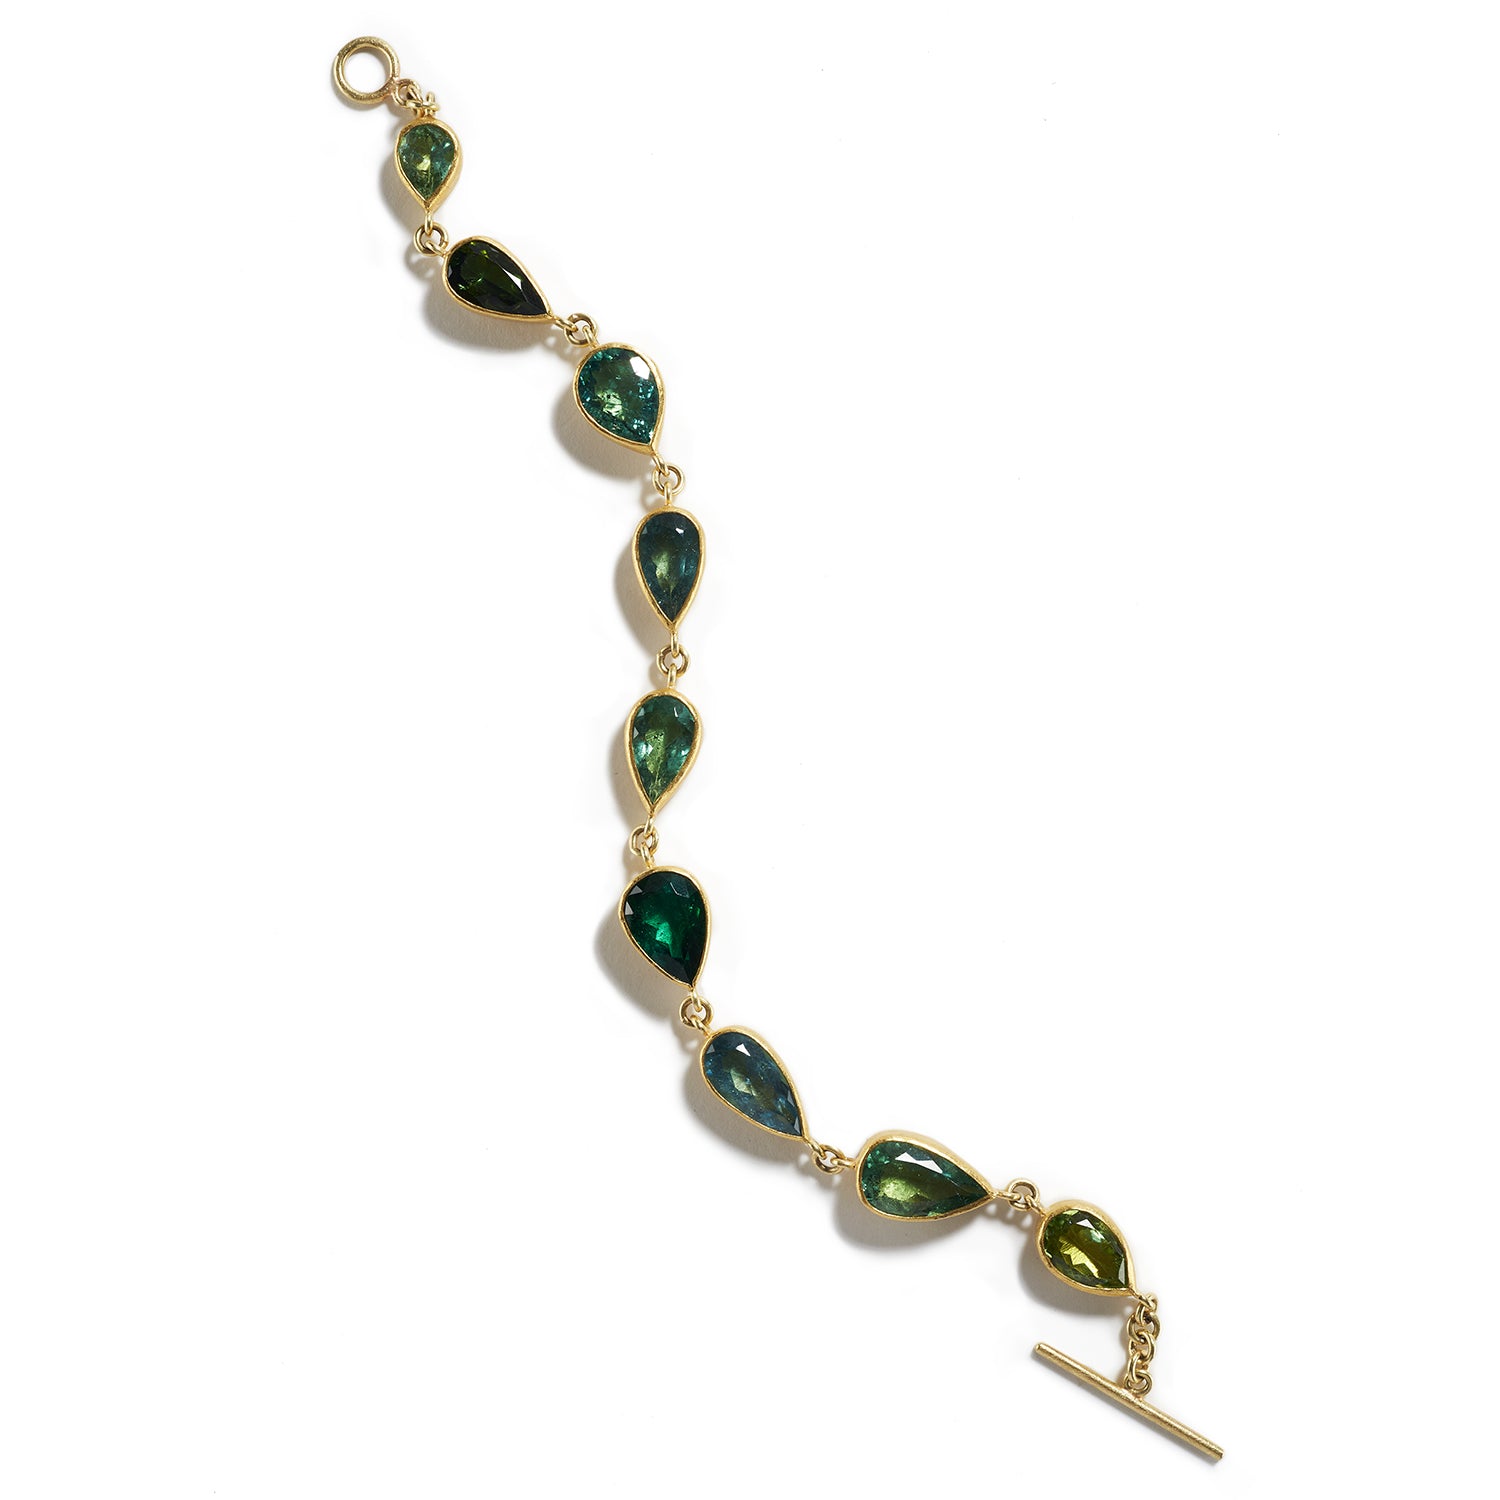 Shades of Green Tourmaline Bracelet